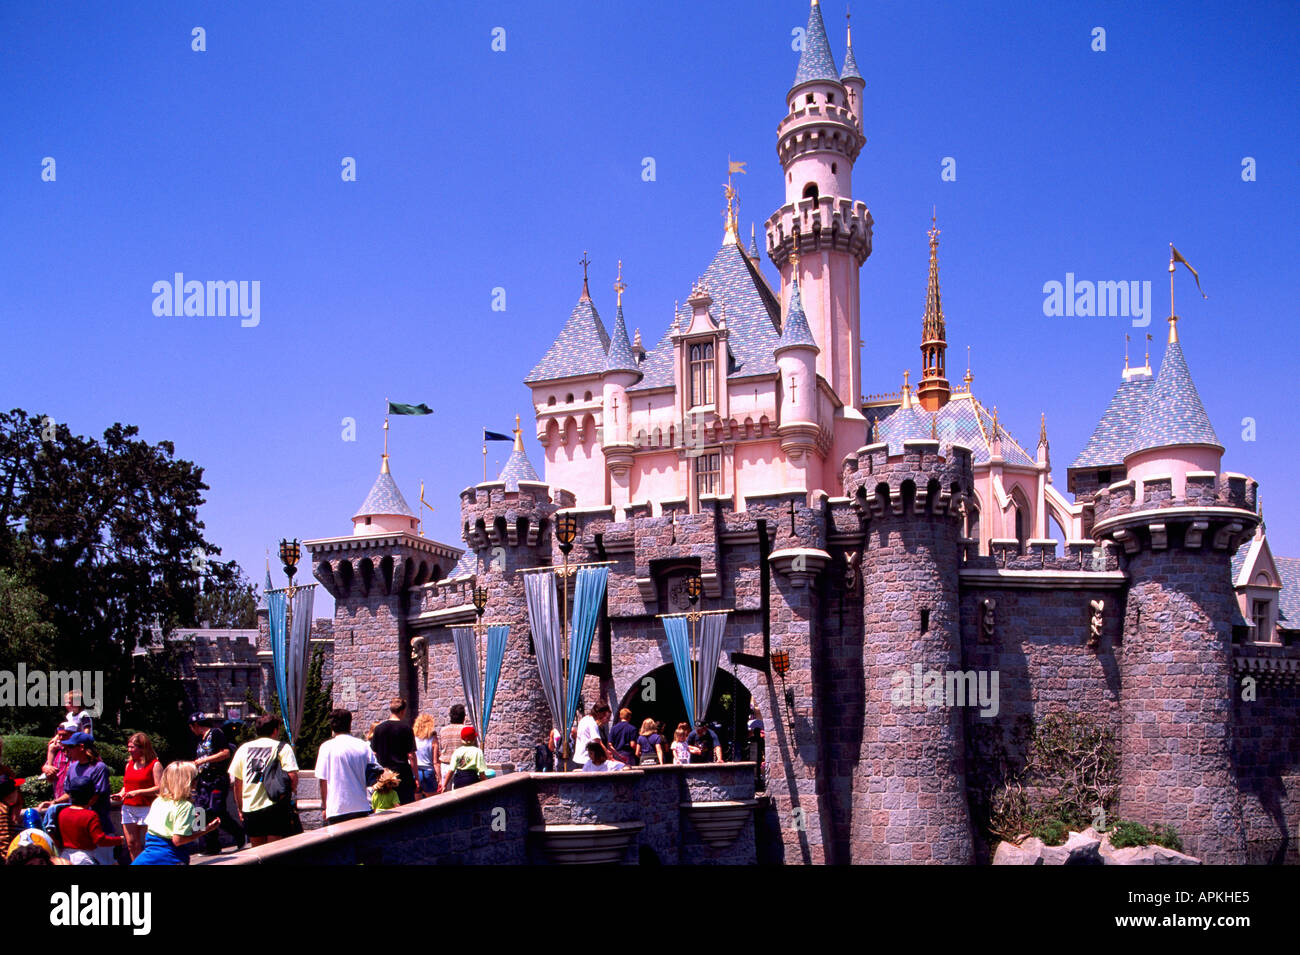 The Entrance to Fantasyland at Disneyland in Anaheim California, USA